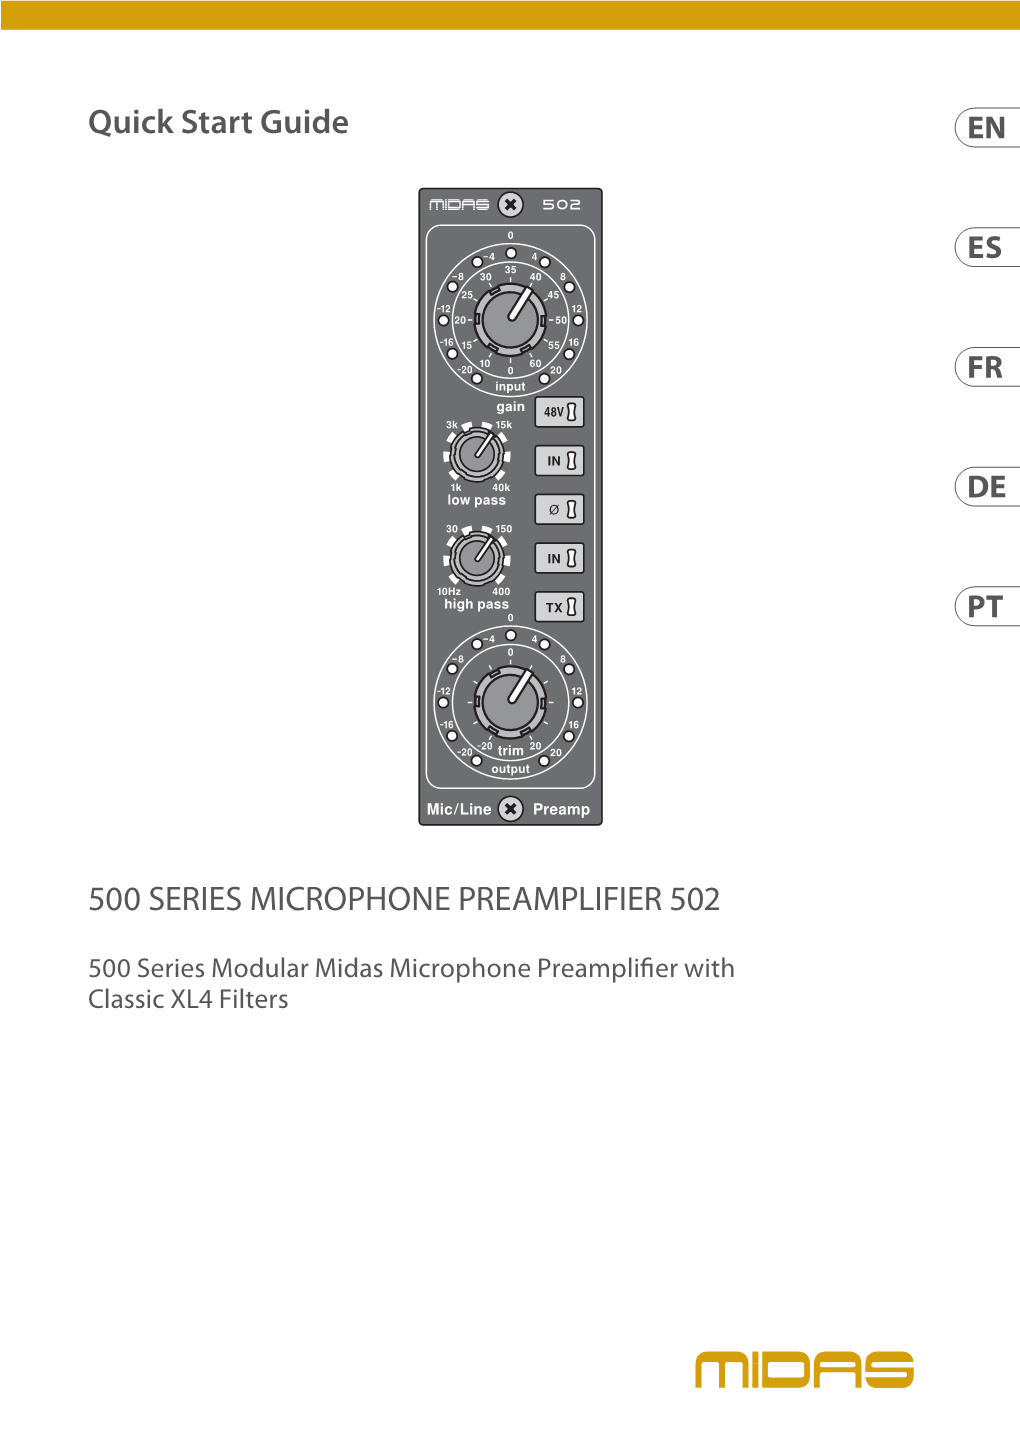 CREA DOCU1 PH1 QSG P0E8H MICROPHONE PREAMPLIFIER 502 EN A6 2019-07-17 Rev.1.Indd